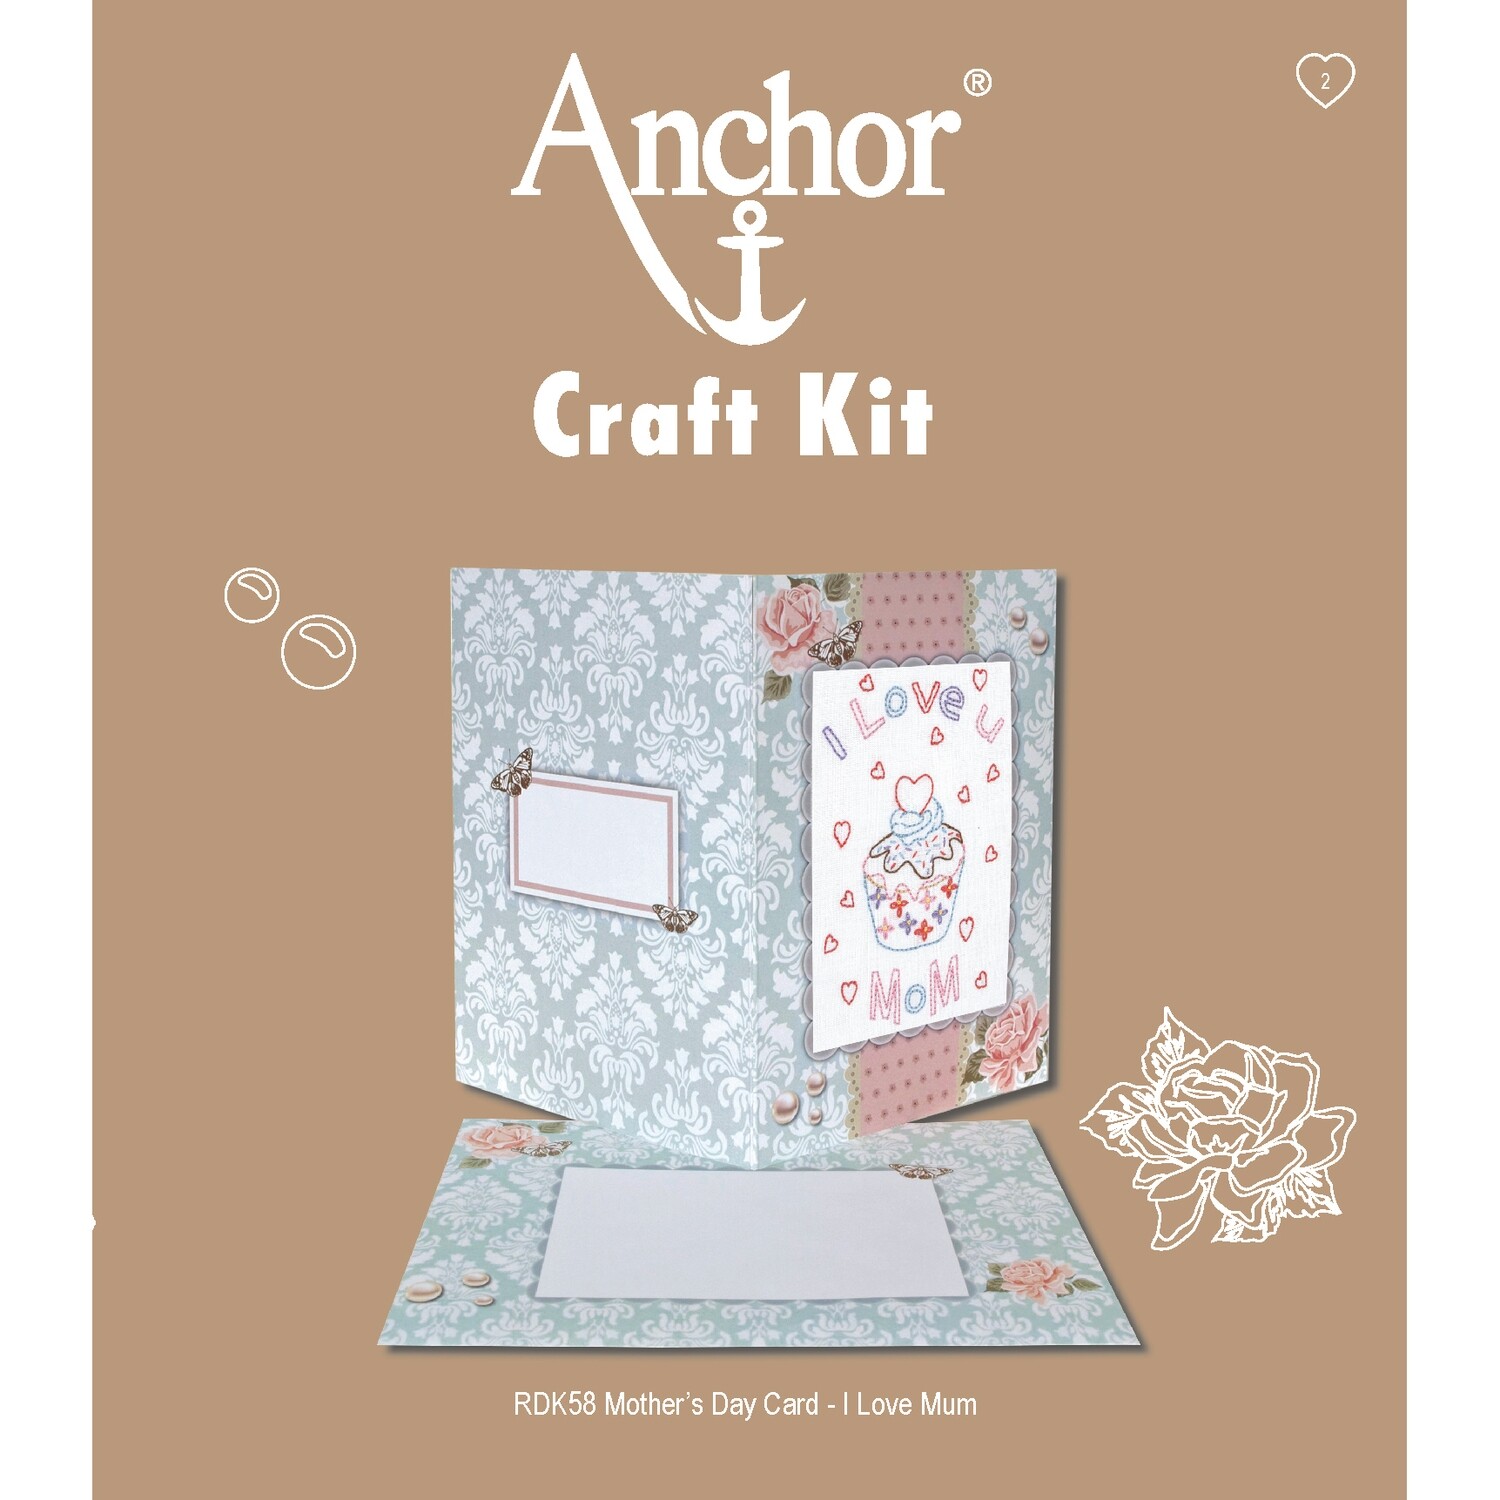 Anchor Craft Kit - I Love U Mom Card